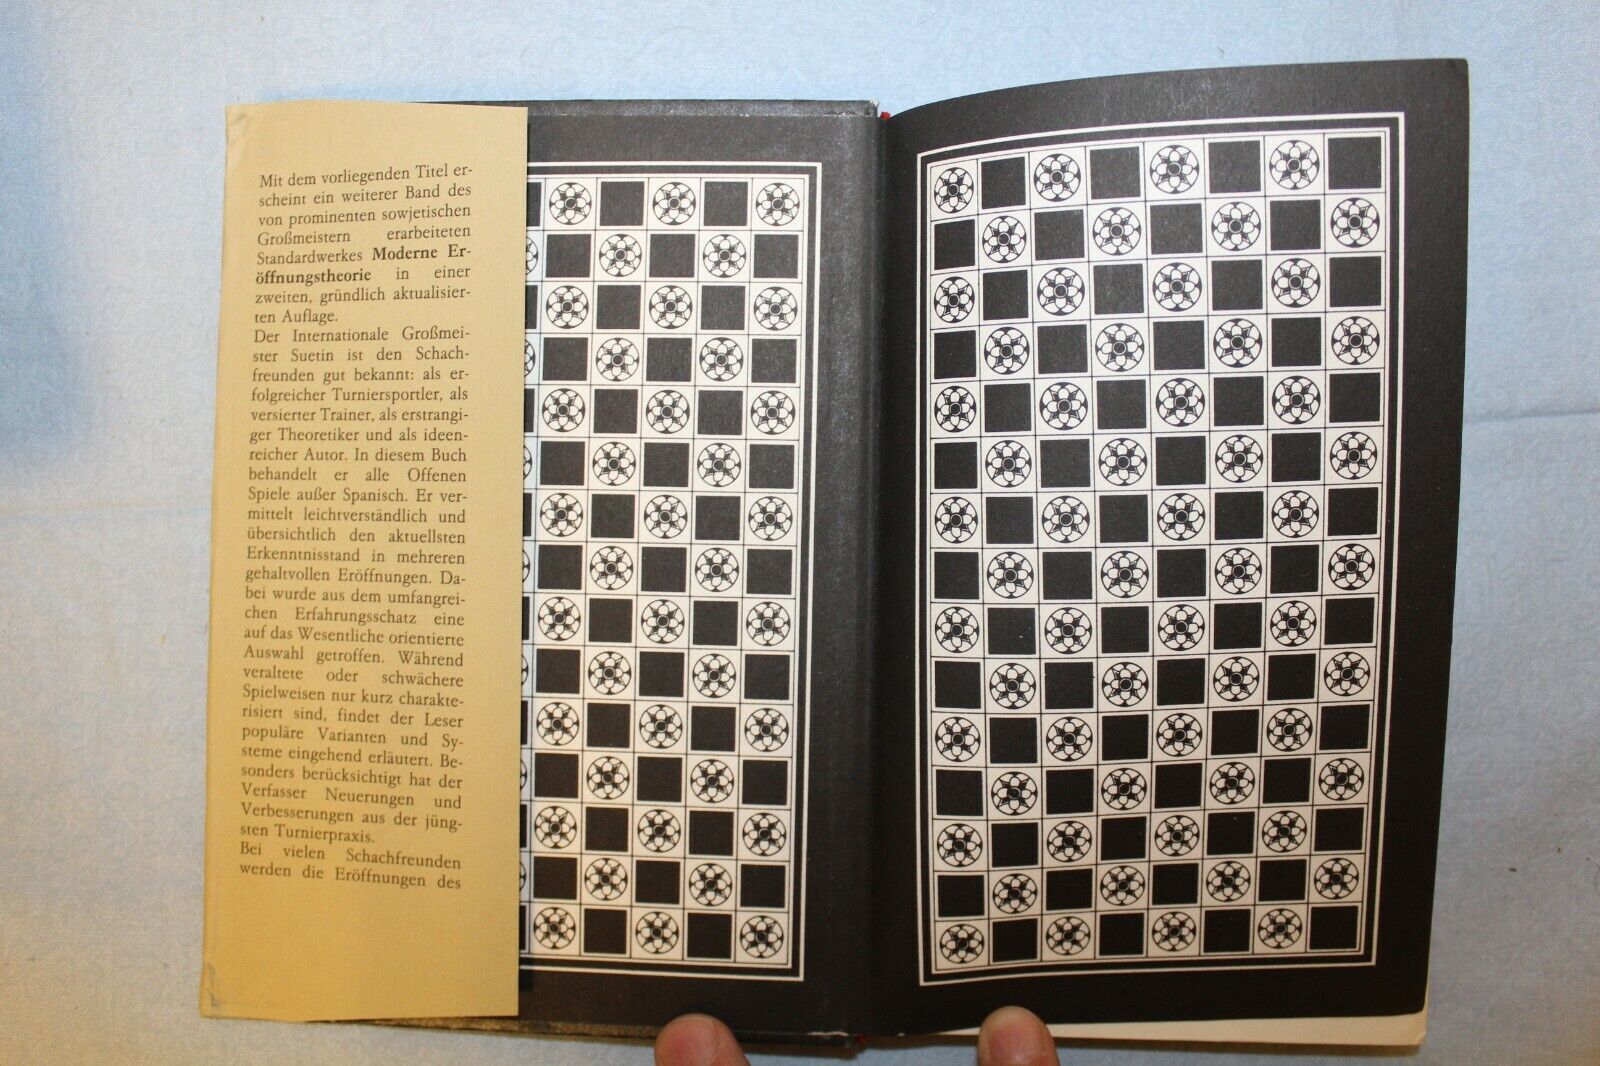 11310.German Chess Book Signed by Suetin to Polugaevsky. Russisch bis Konigsgambit